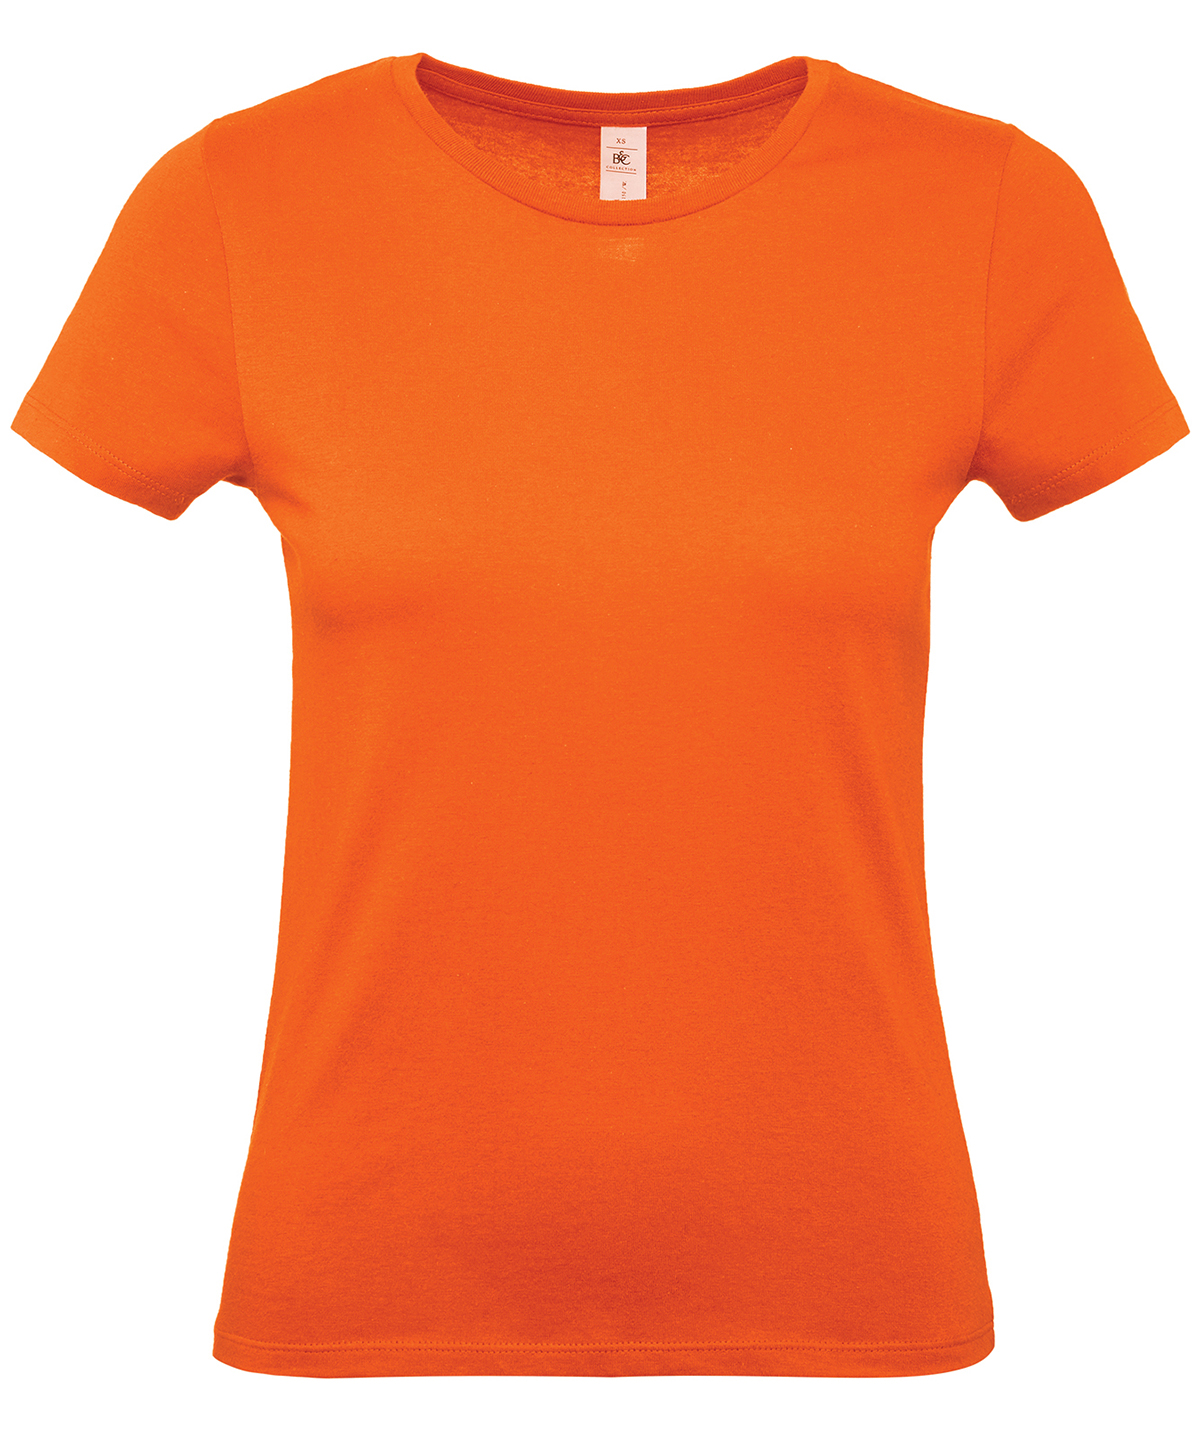 lotus verslag doen van galerij Dames T-shirt Oranje – Sponsorkleding.nl